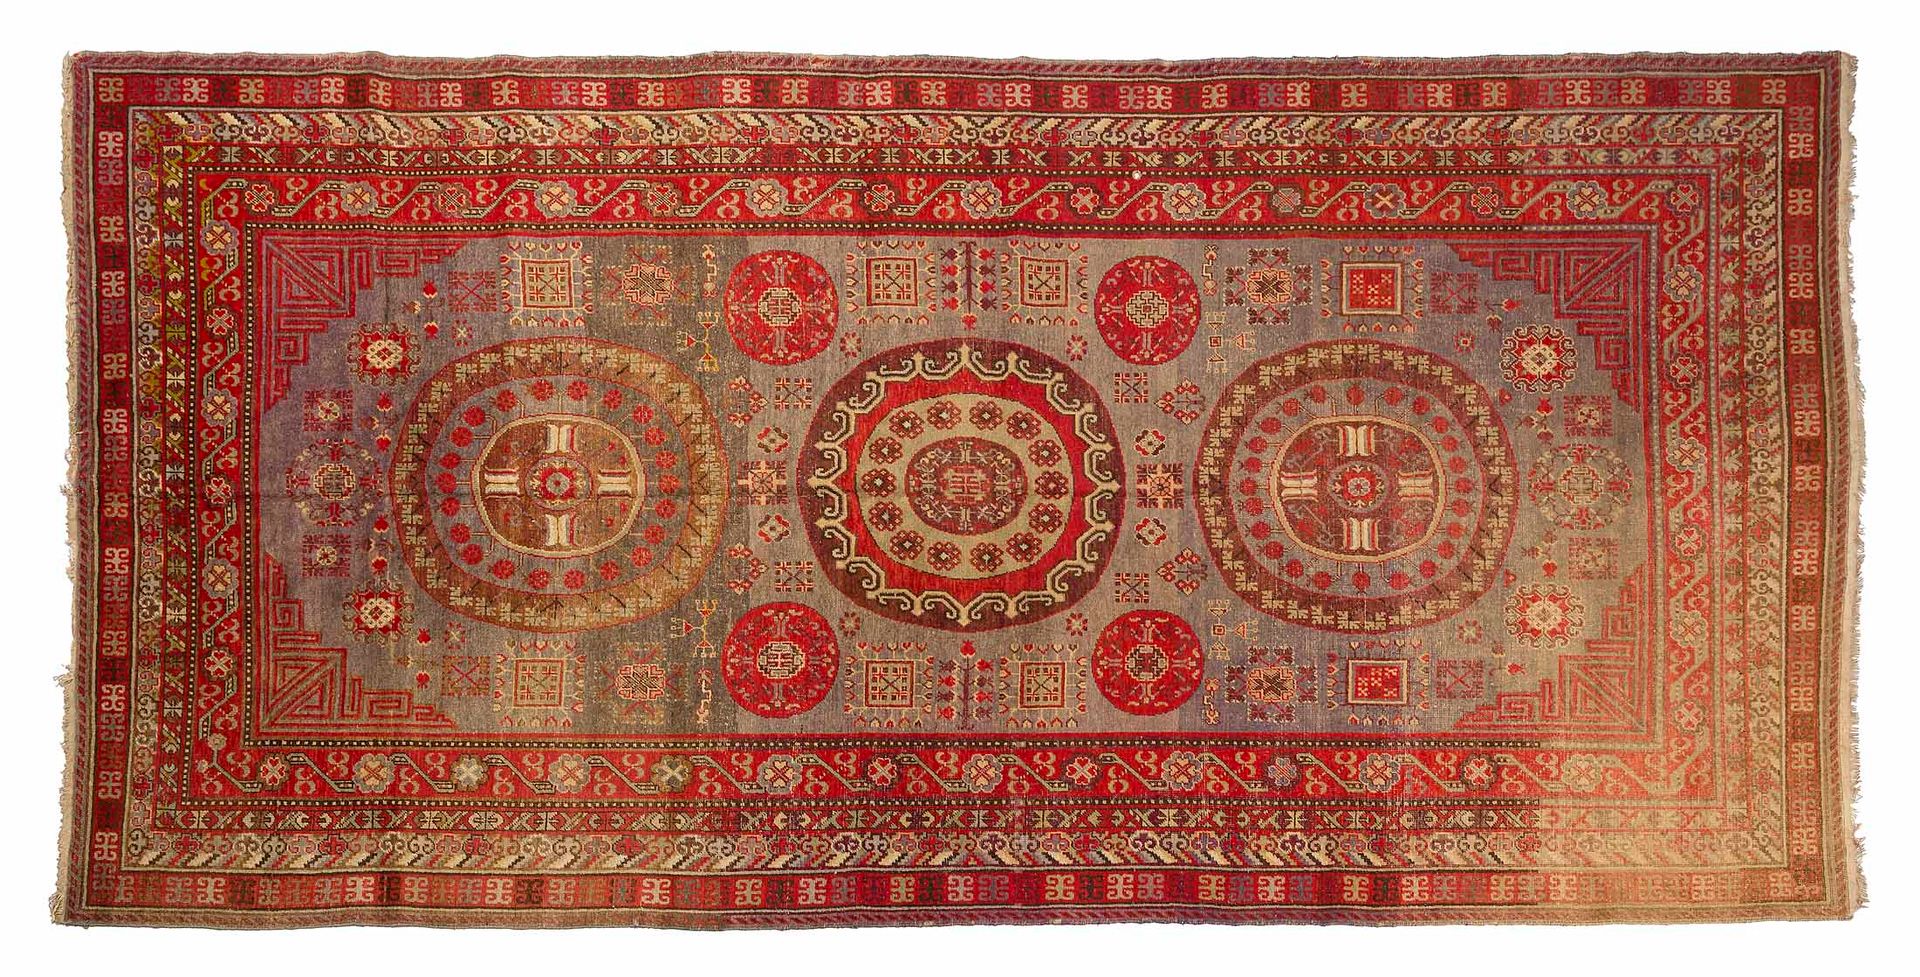 Null Tapis SAMARKANDE (Asie Centrale), fin du 19e siècle

Dimensions : 410 x 210&hellip;